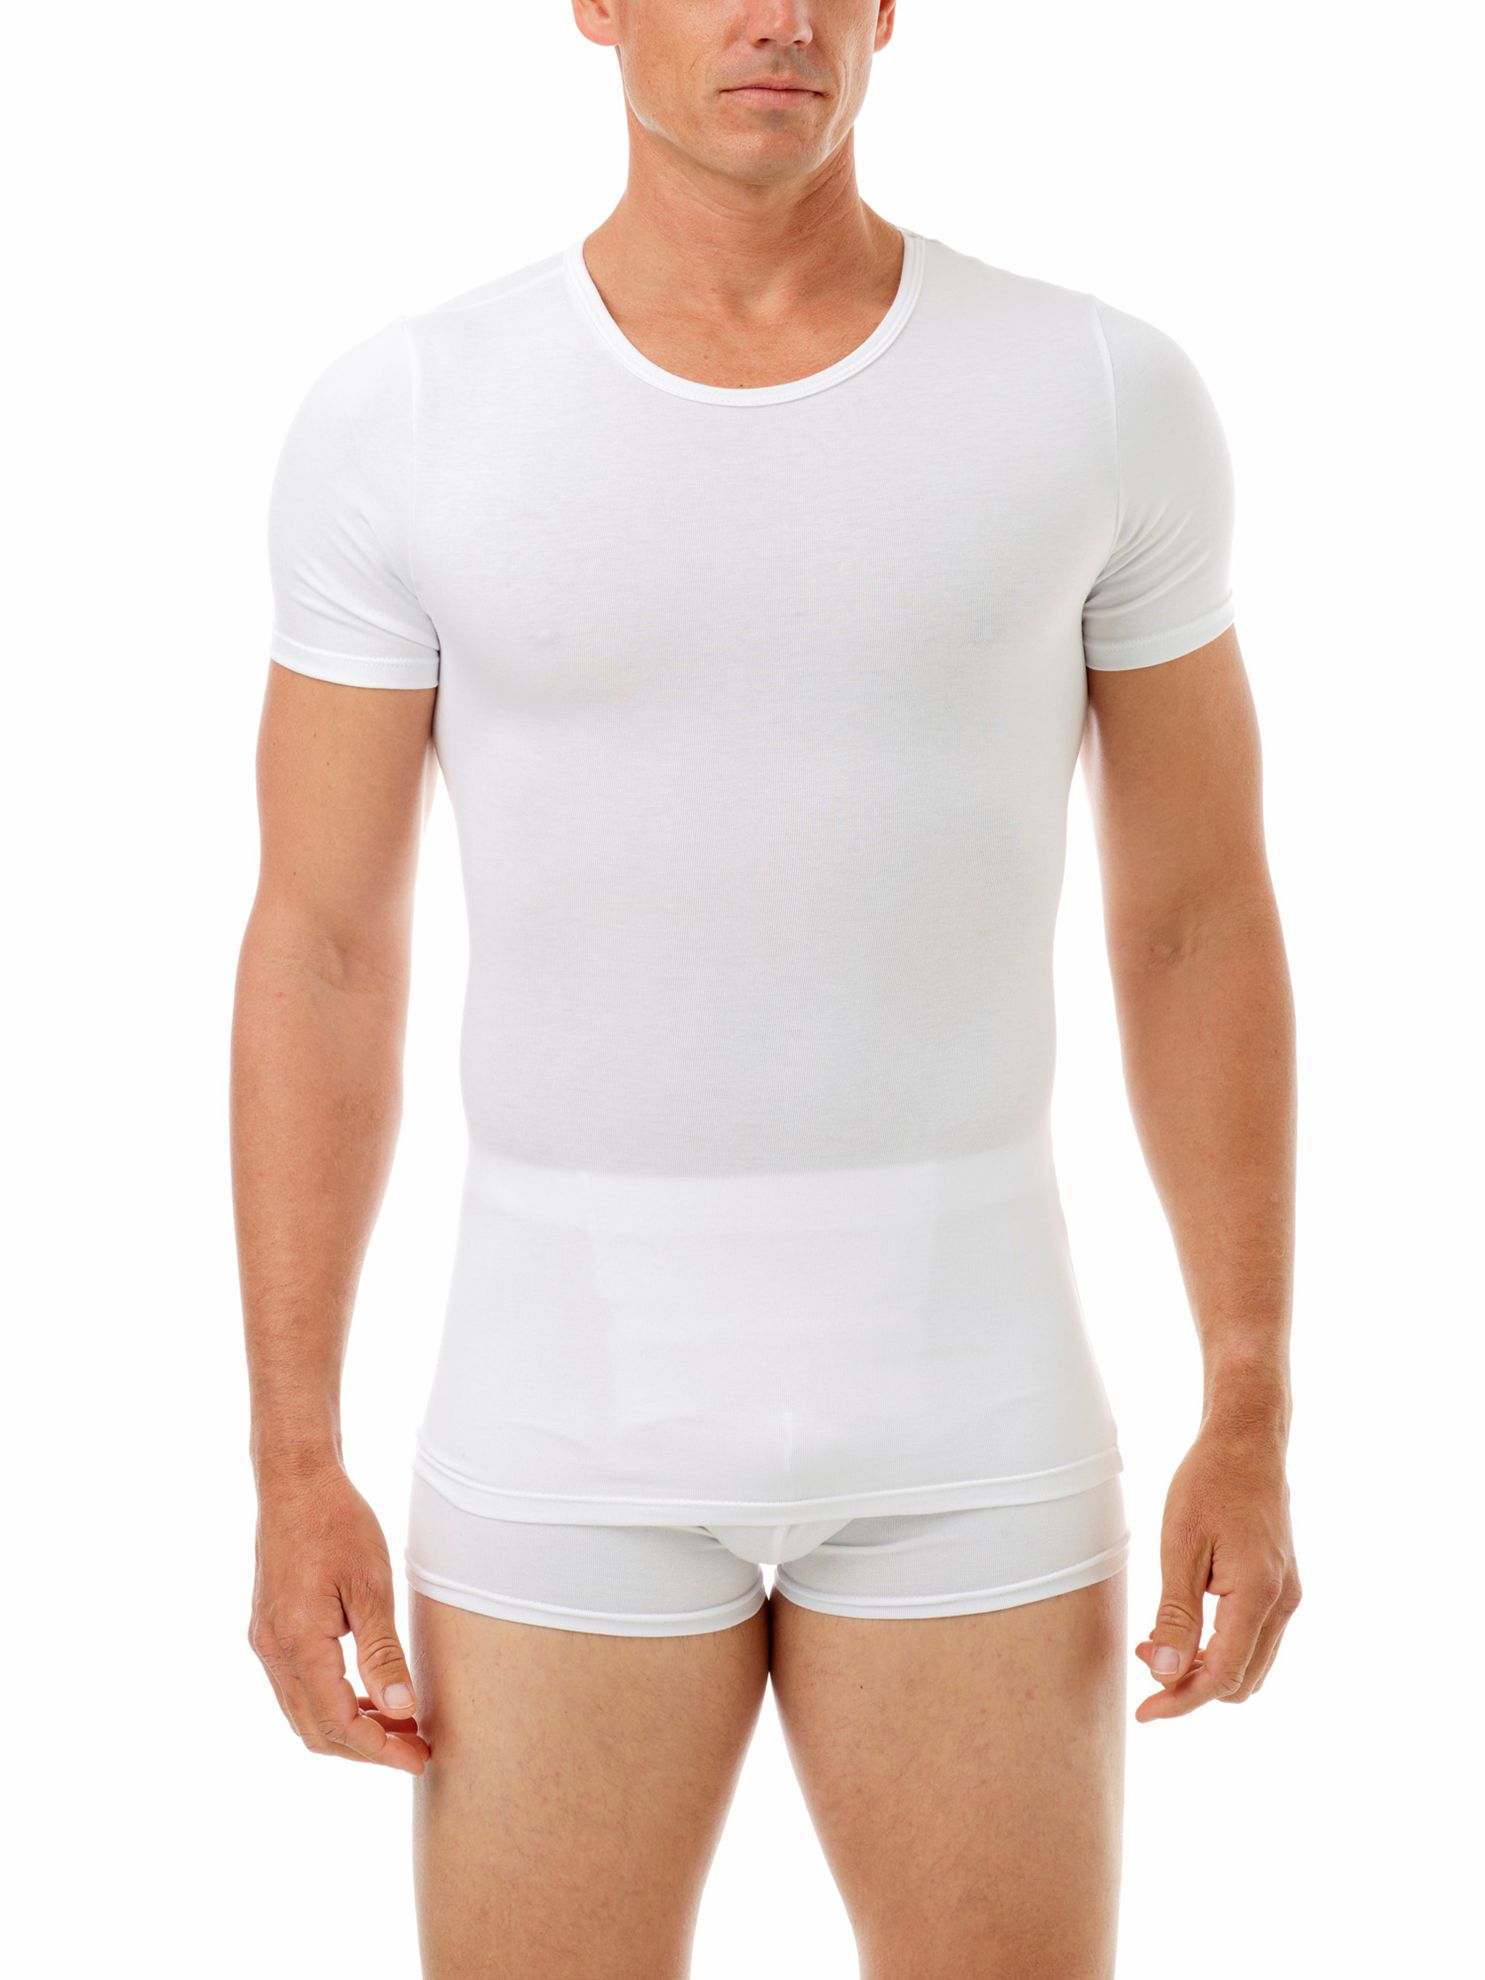 Cotton Spandex Short-Sleeve Top | Men's Compression Gear | Underworks